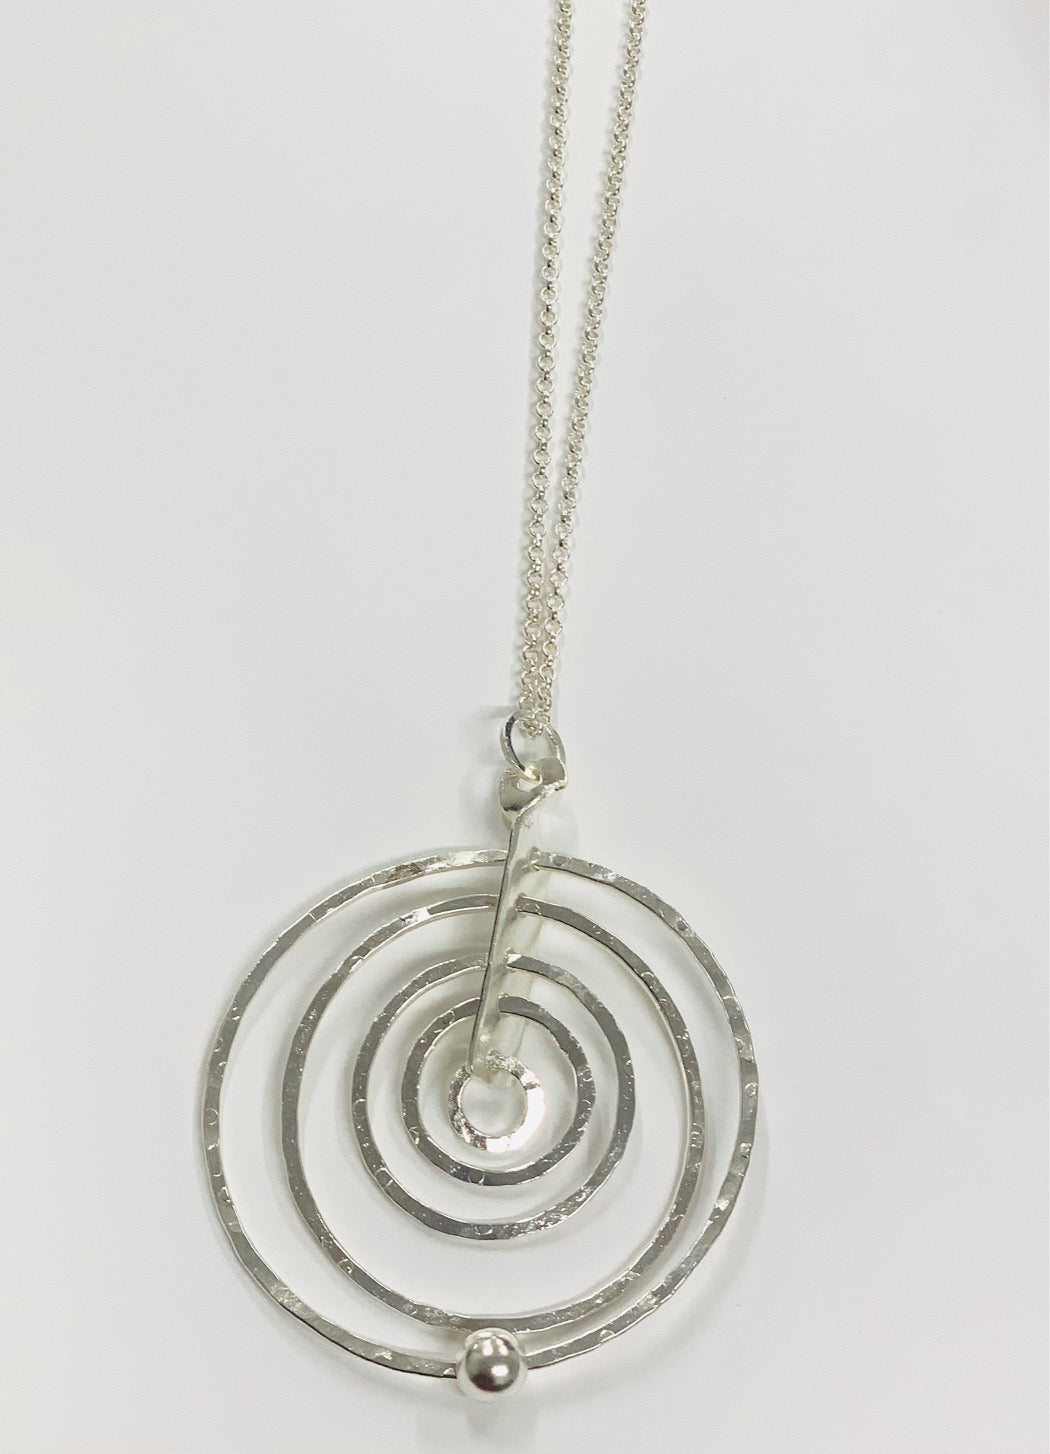 Concentric circles silver pendant